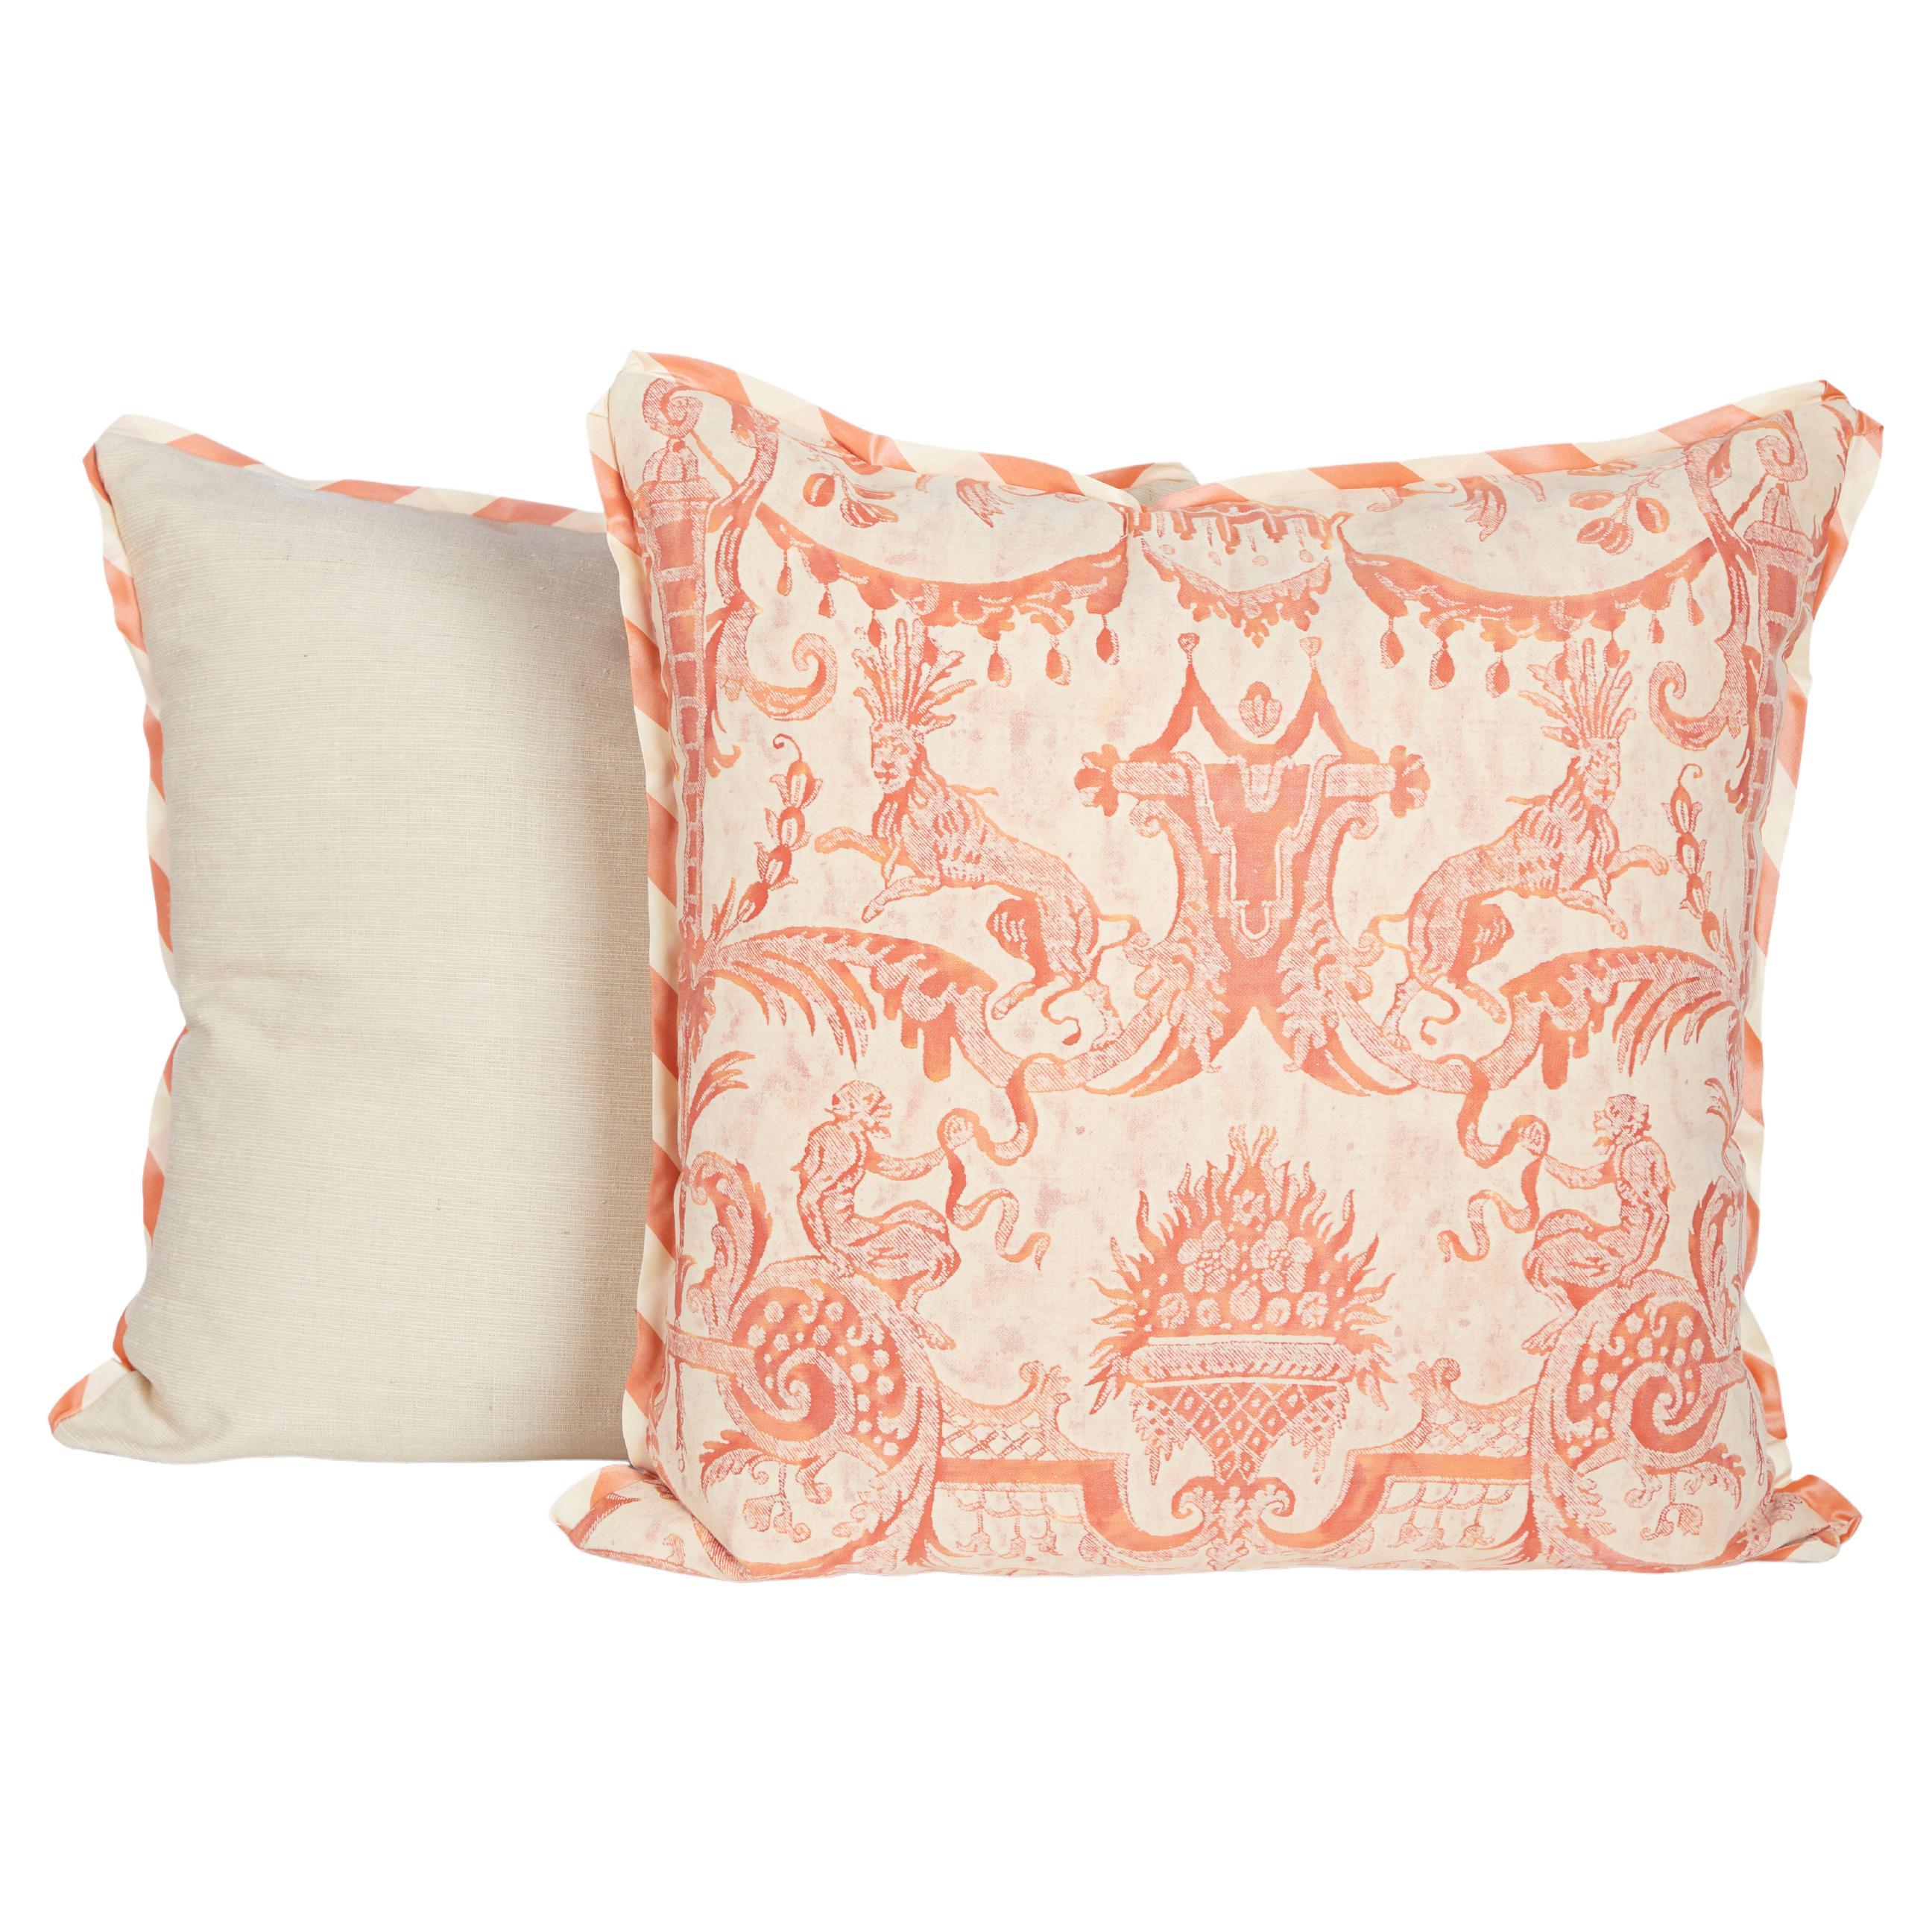 Pair of Fortuny Mazzarino Cushions in Orange and White by David Duncan Studio